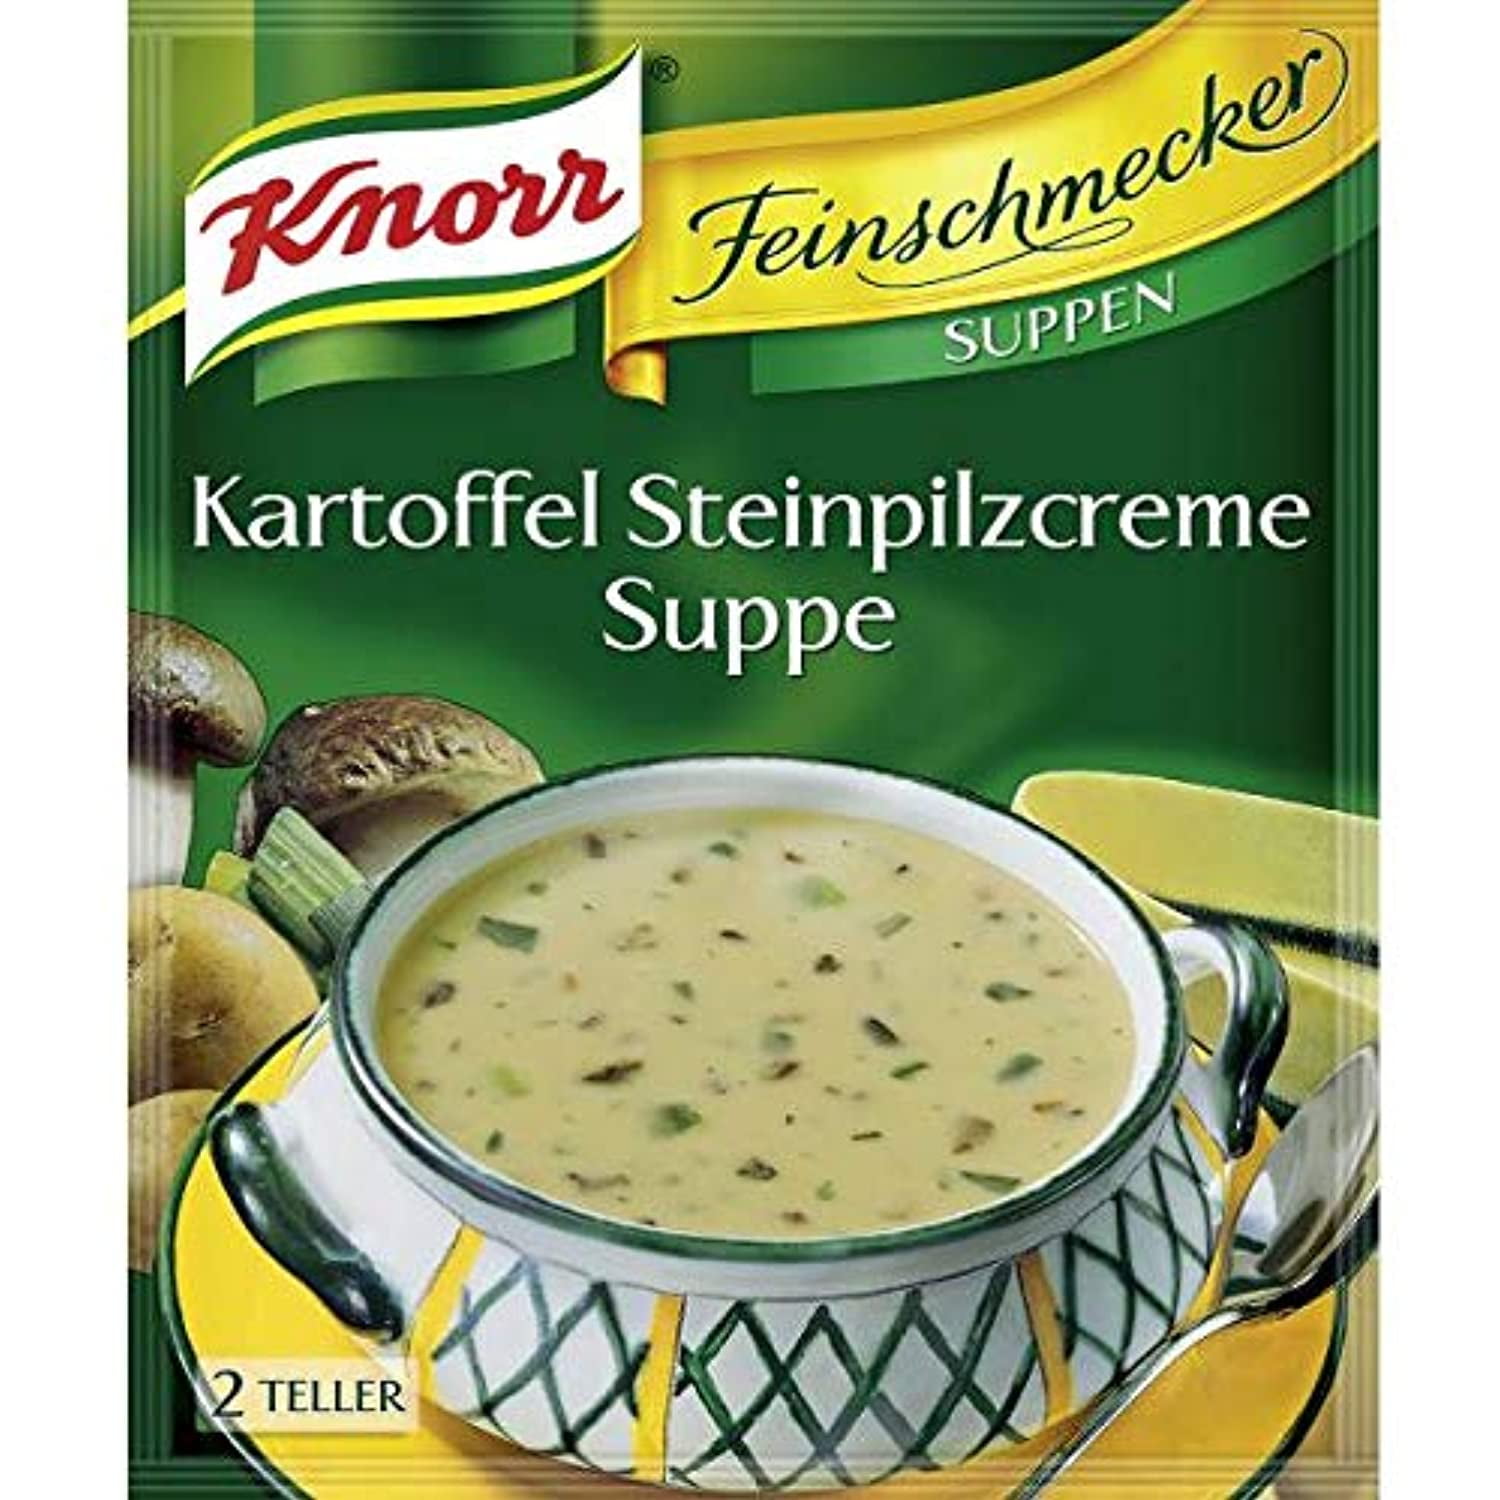 Kartoffel (3-Pack) Cream Mushroom Potato Wild Cremesuppe And Knorr Soup Steinpilz